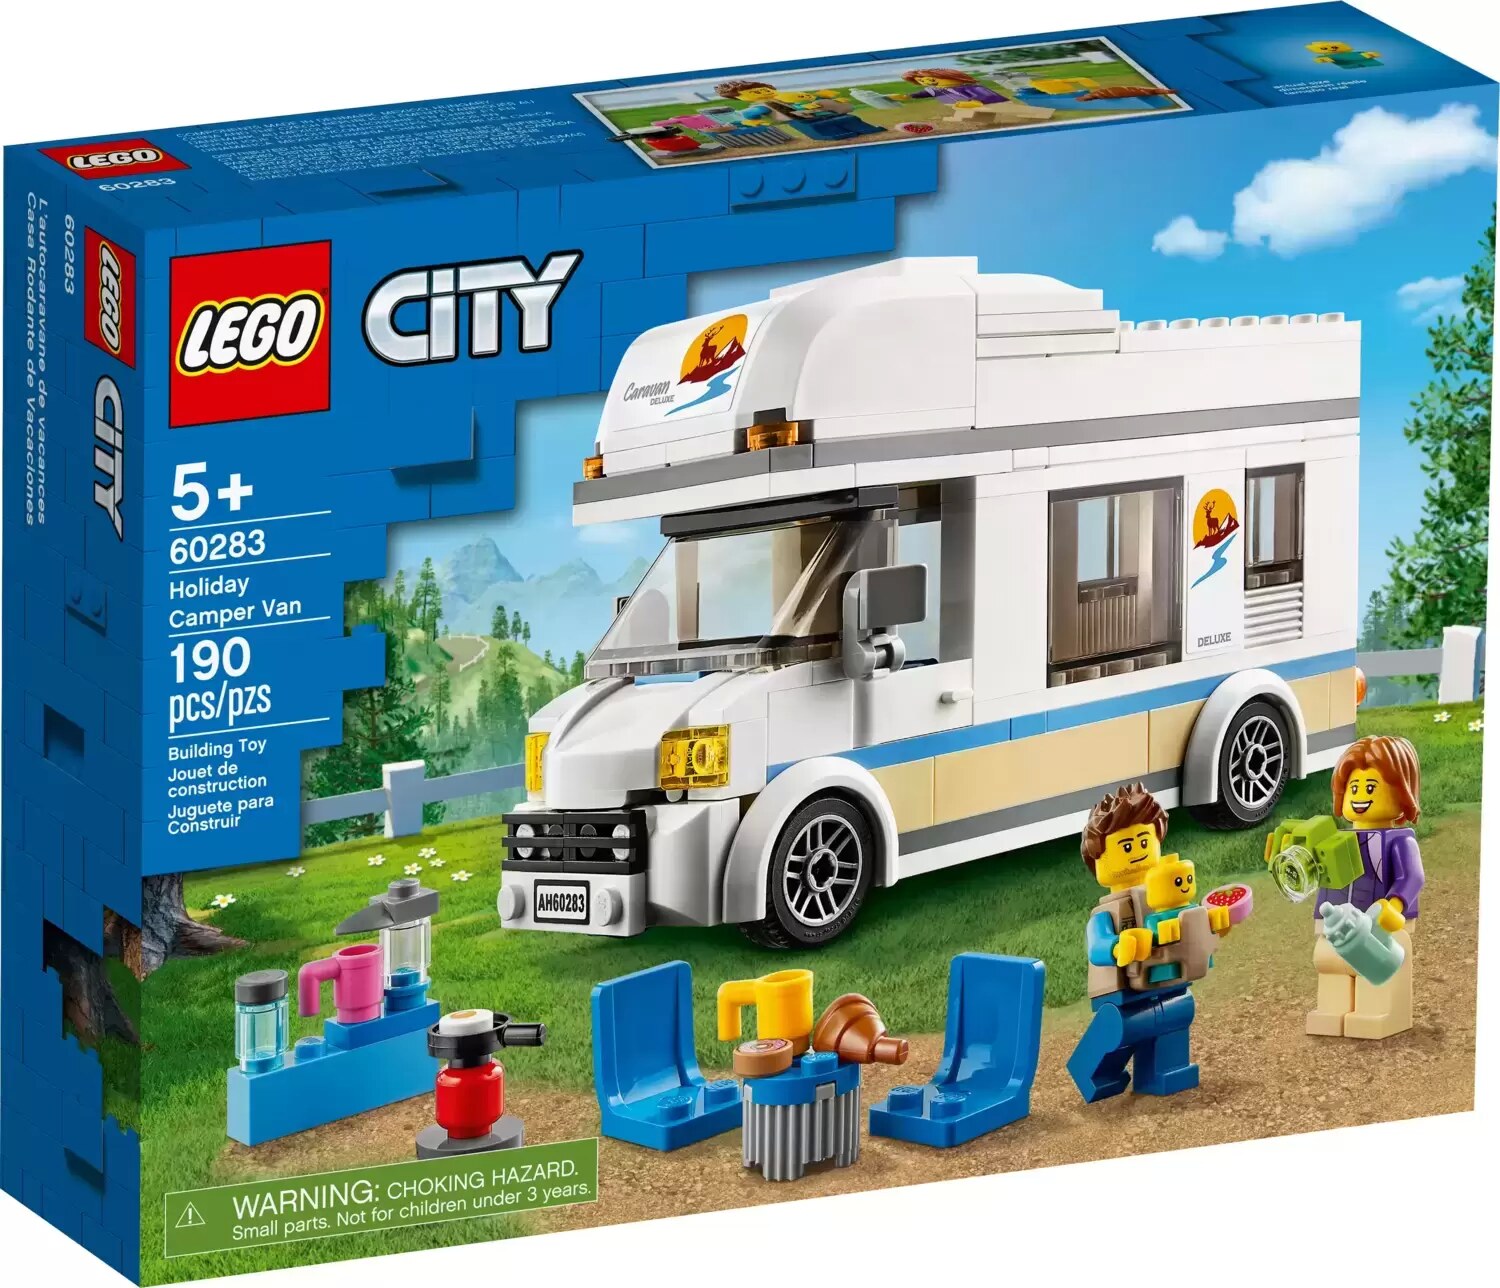 LEGO CITY - Holiday Camper Van